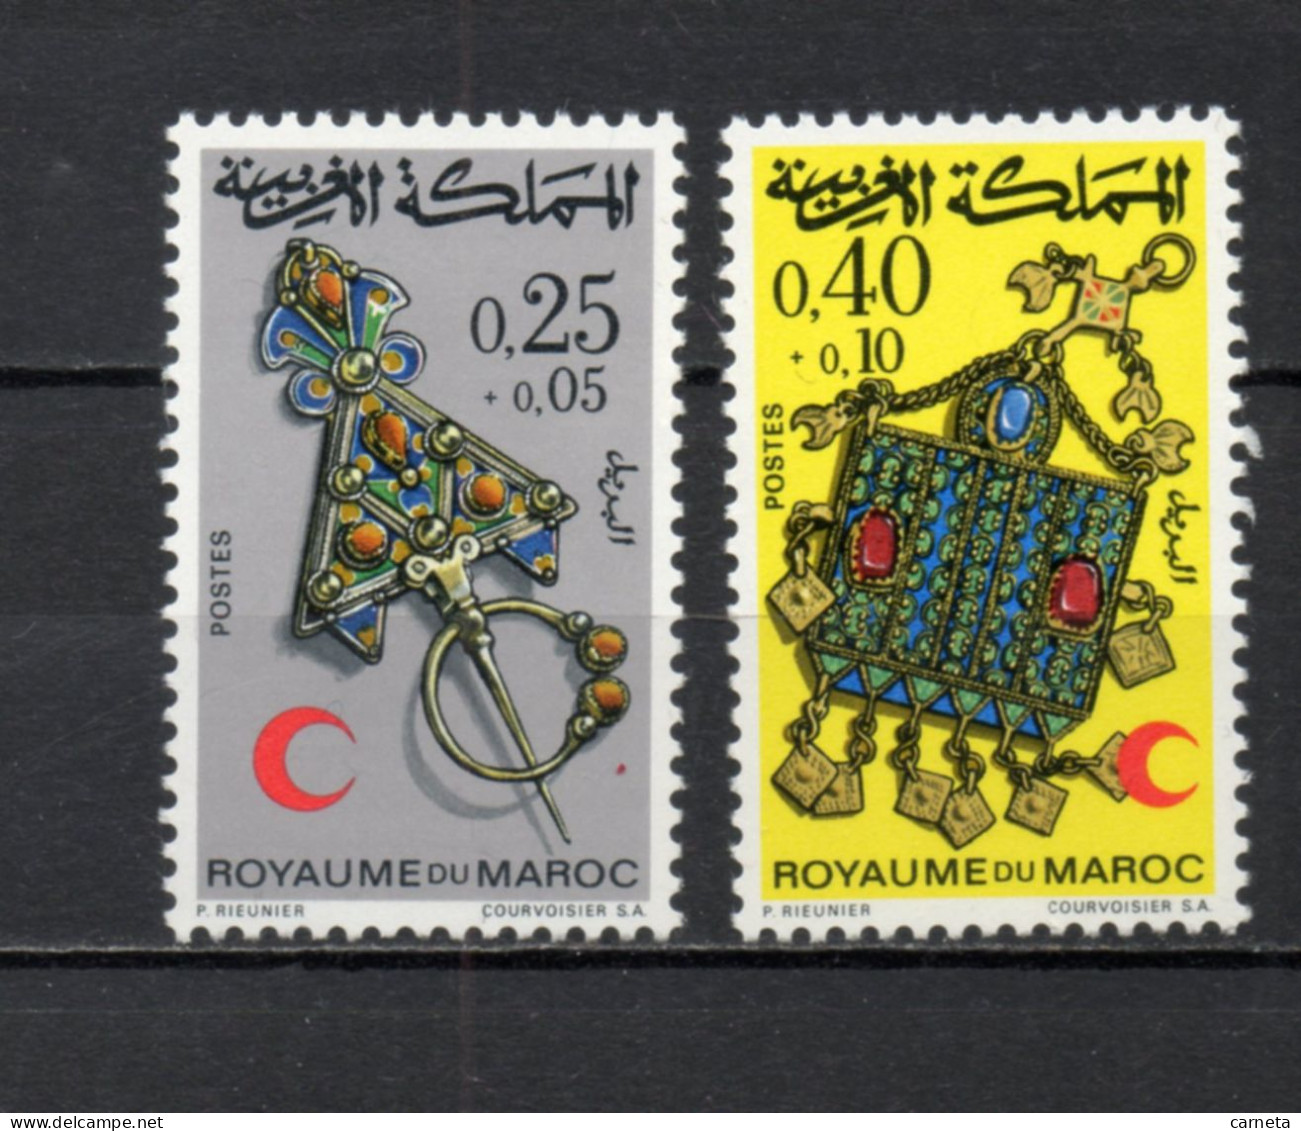 MAROC N°  616 + 617     NEUFS SANS CHARNIERE  COTE 4.05€    CROISSANT ROUGE - Marokko (1956-...)